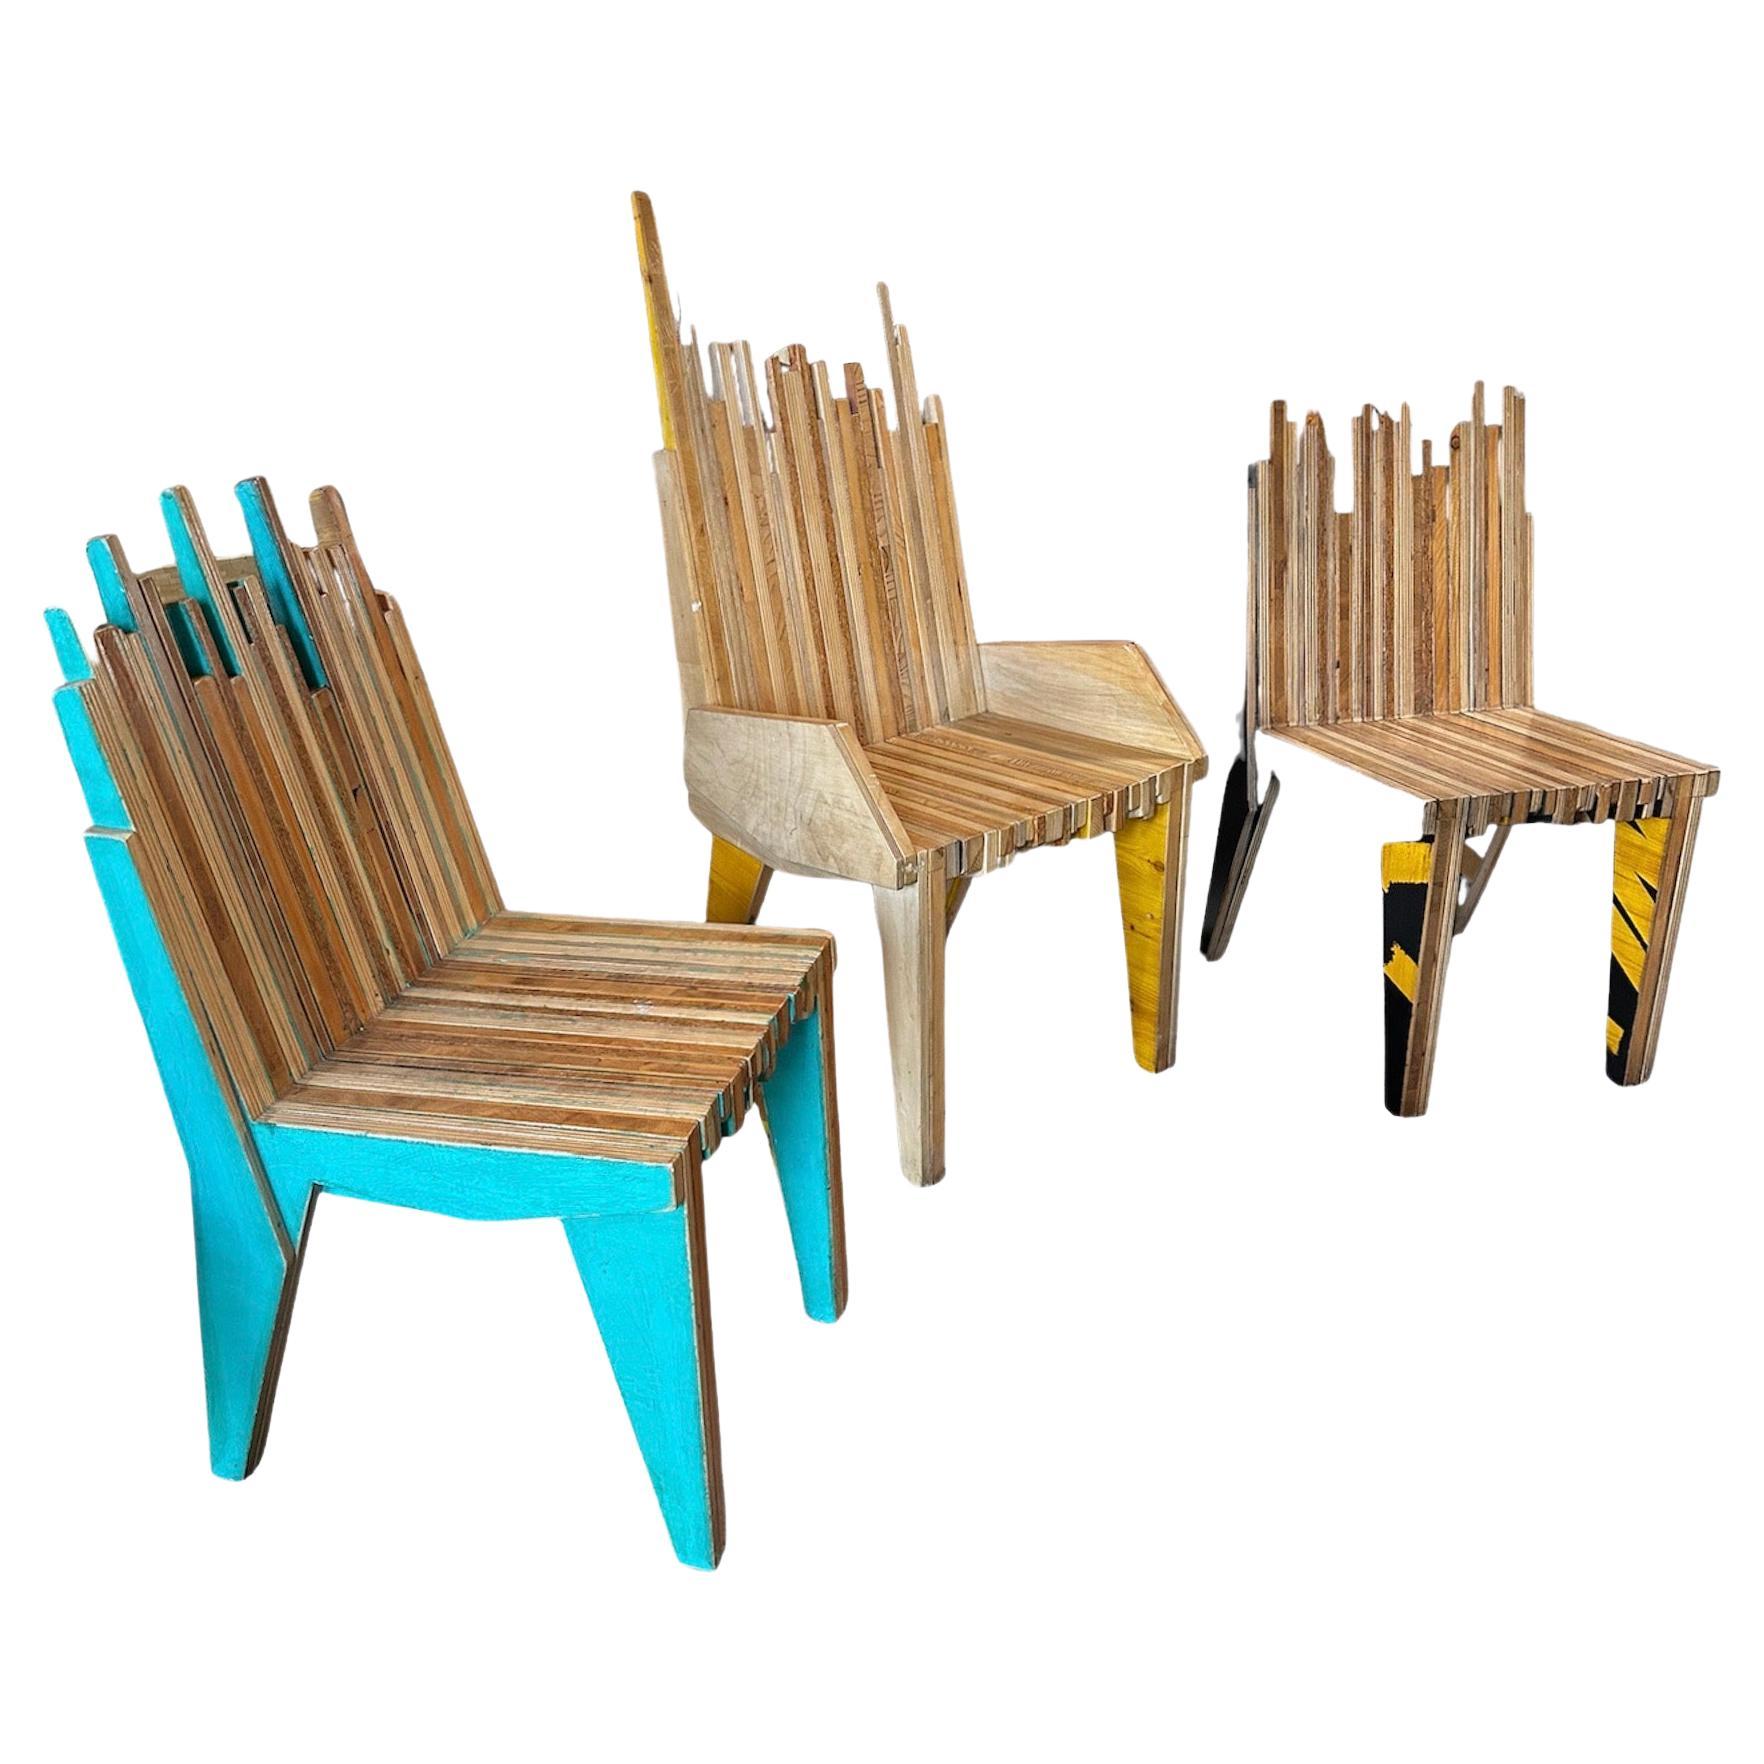 Ensemble de 3 chaises rares en bois  Par Robino &  Denton pour Petroglyph 2011